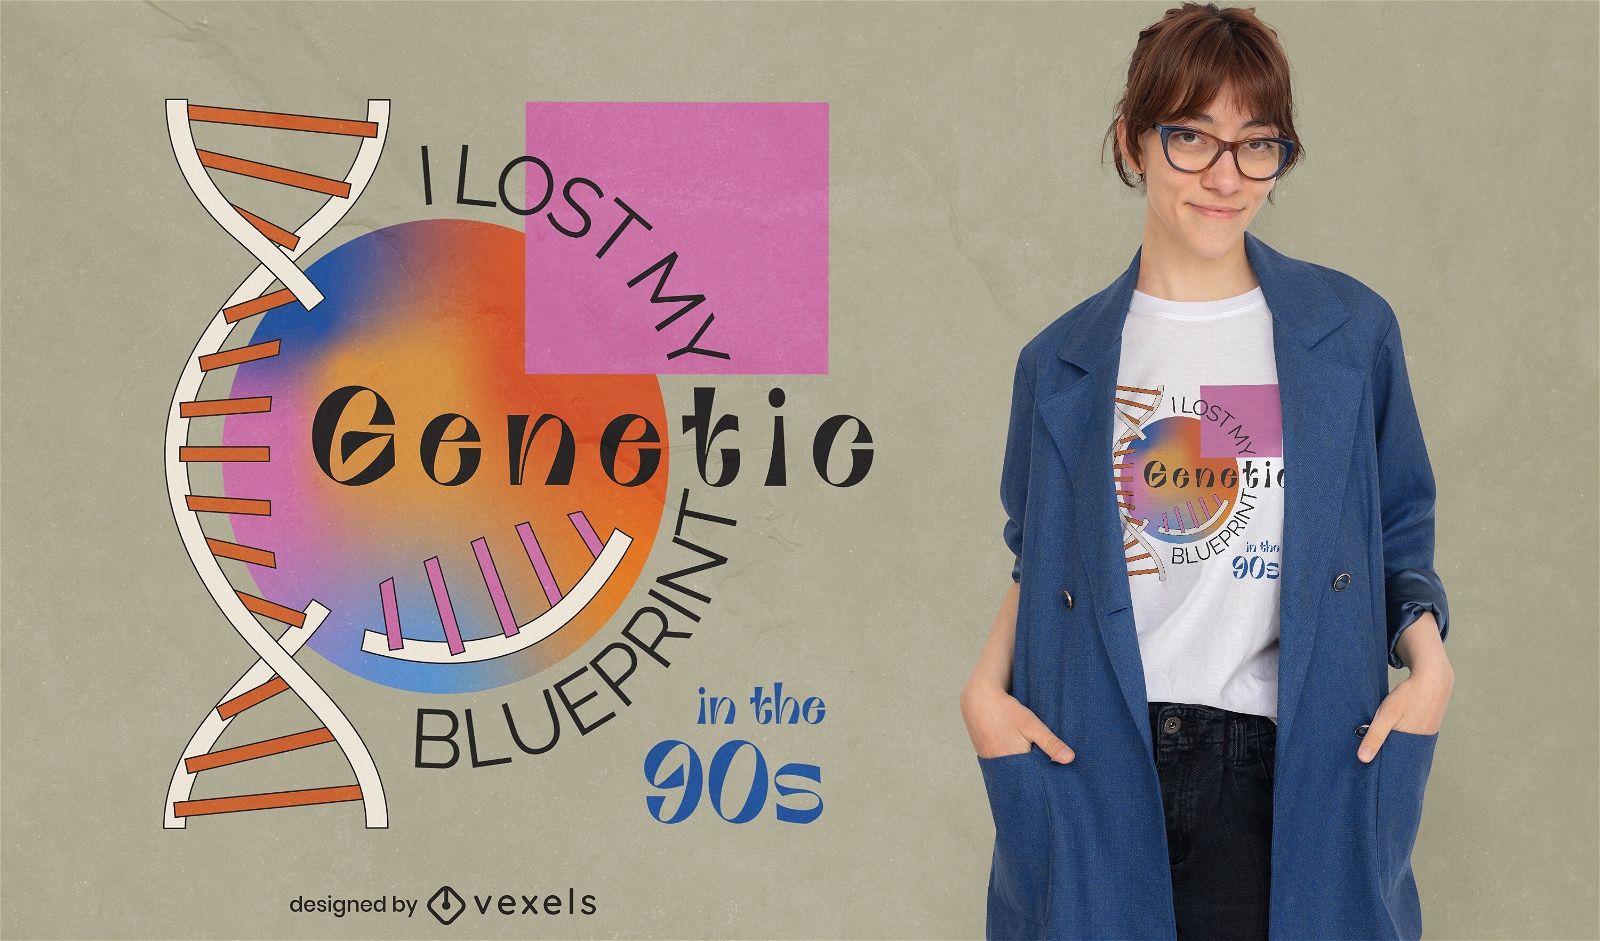 Genetic science DNA t-shirt design